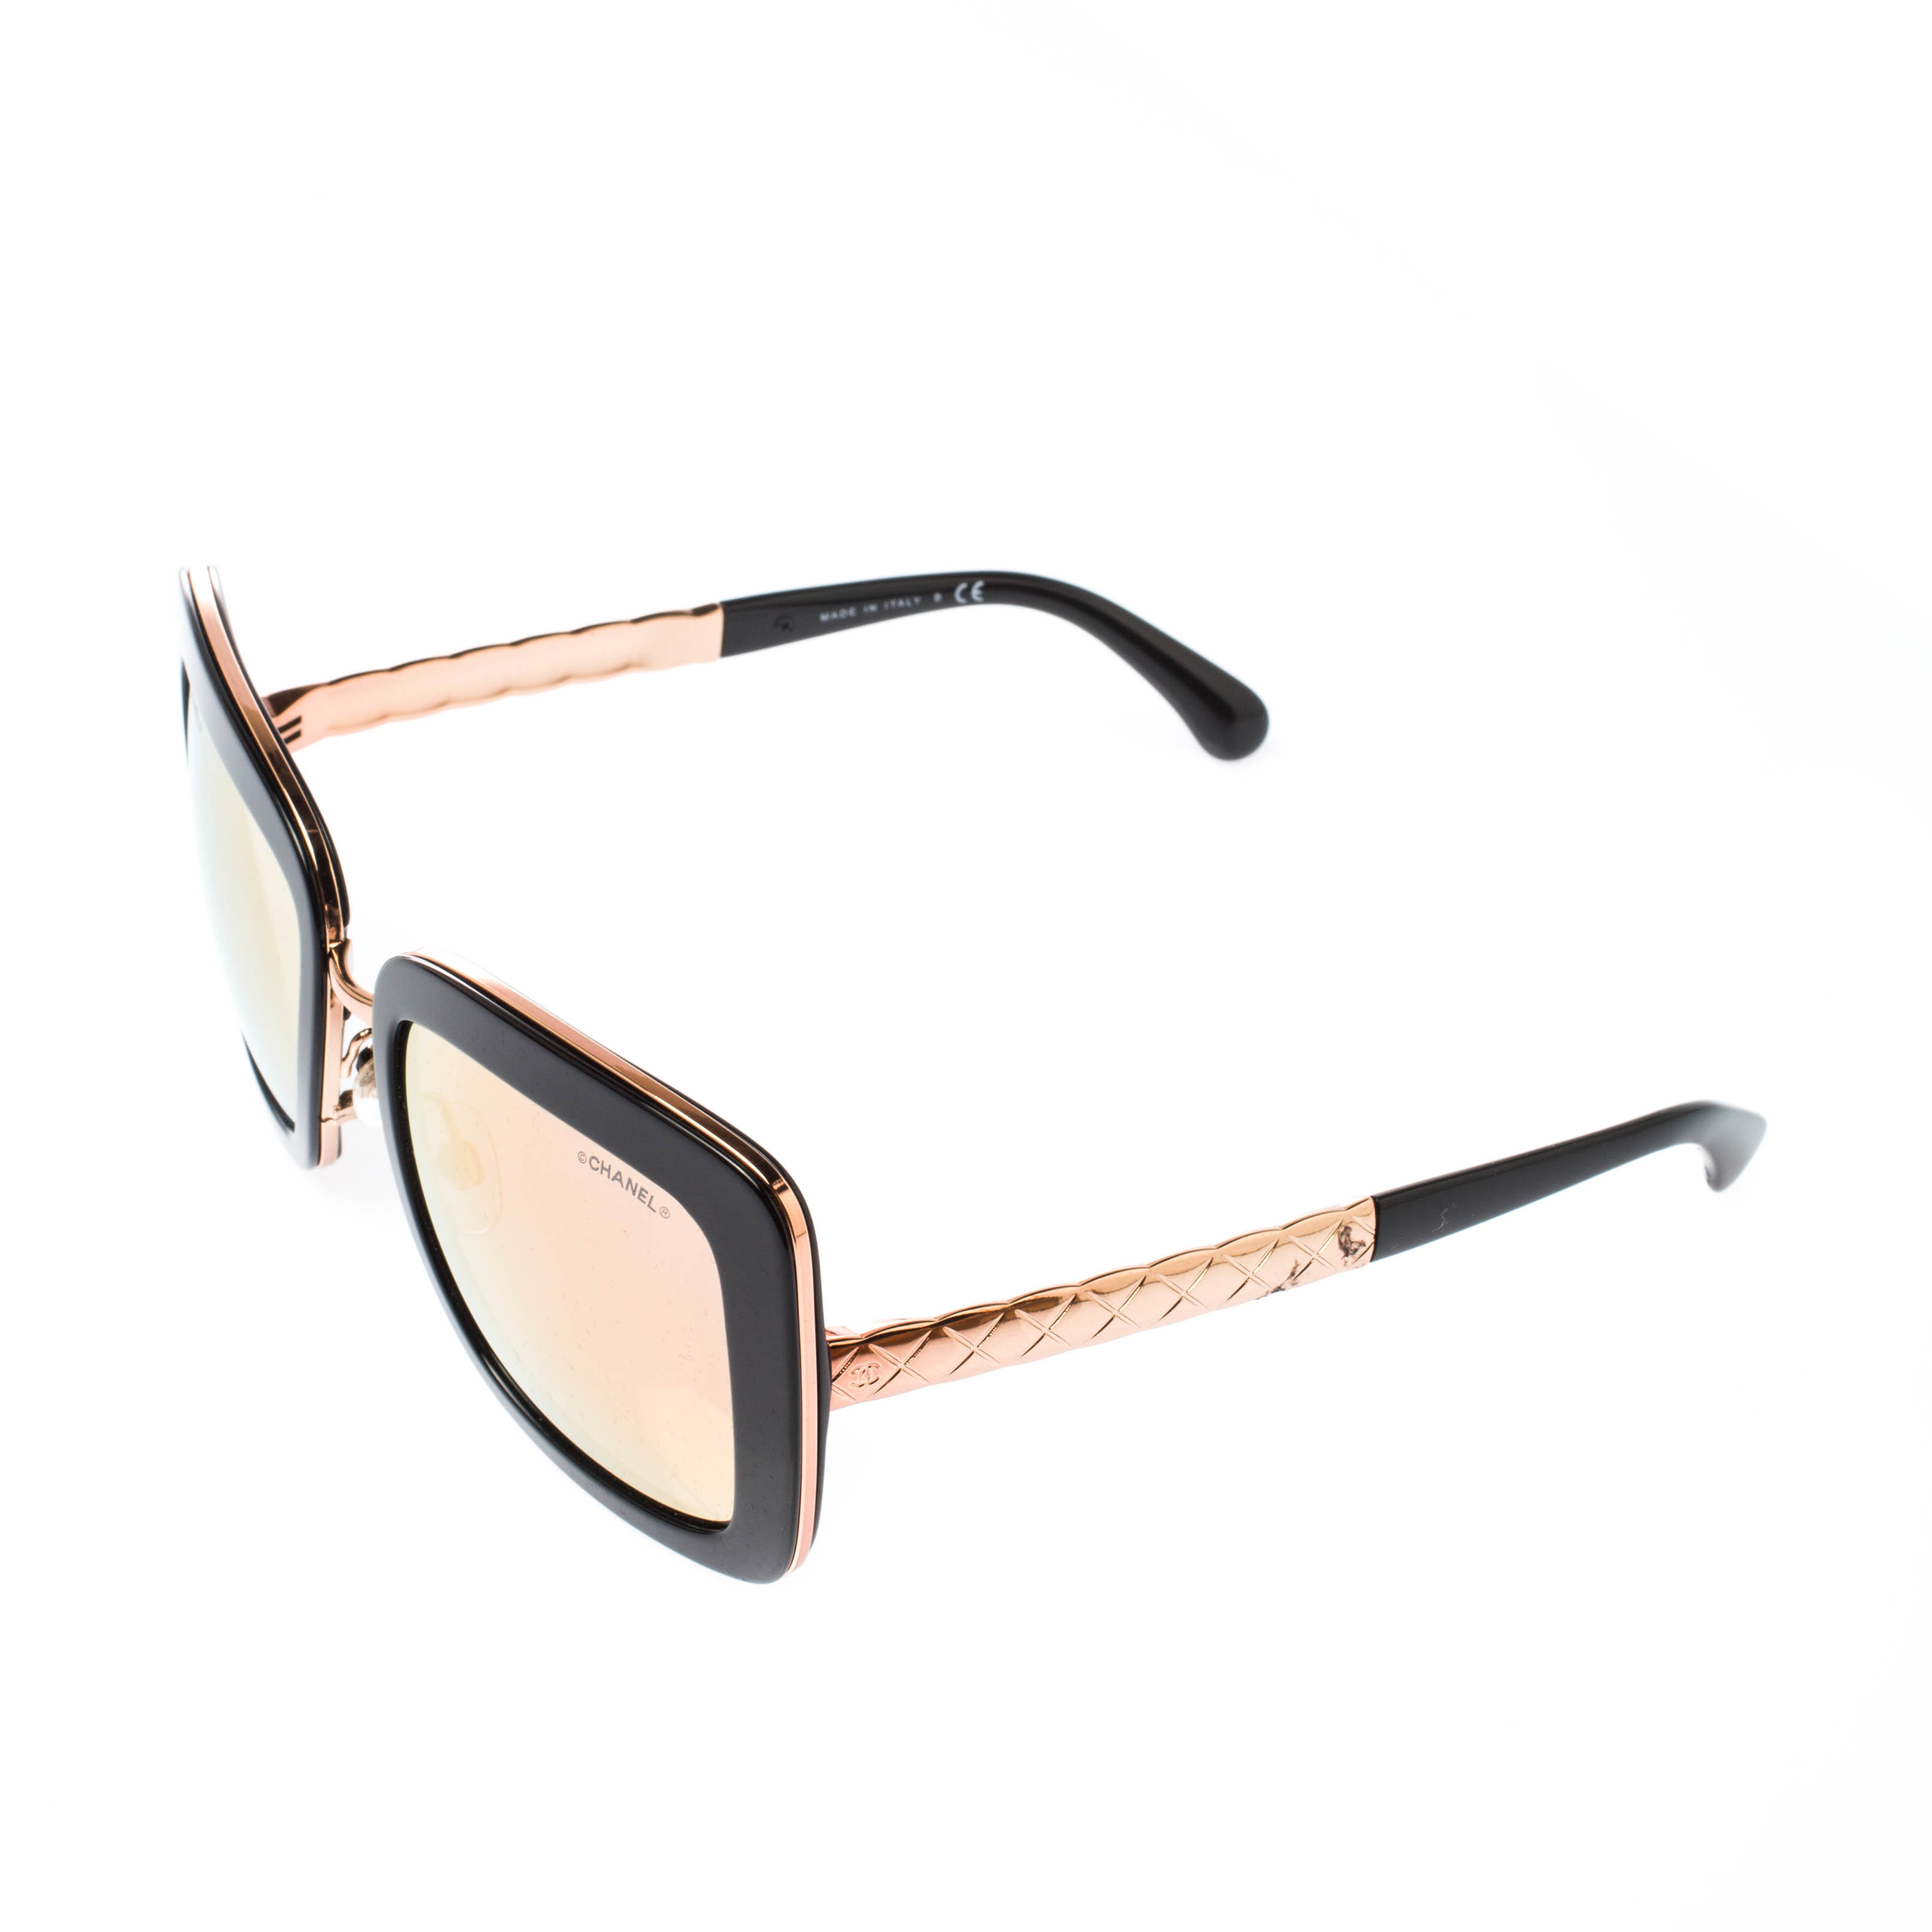 CHANEL Metal Square Spring Sunglasses 5369 Black Pink Gold 187569